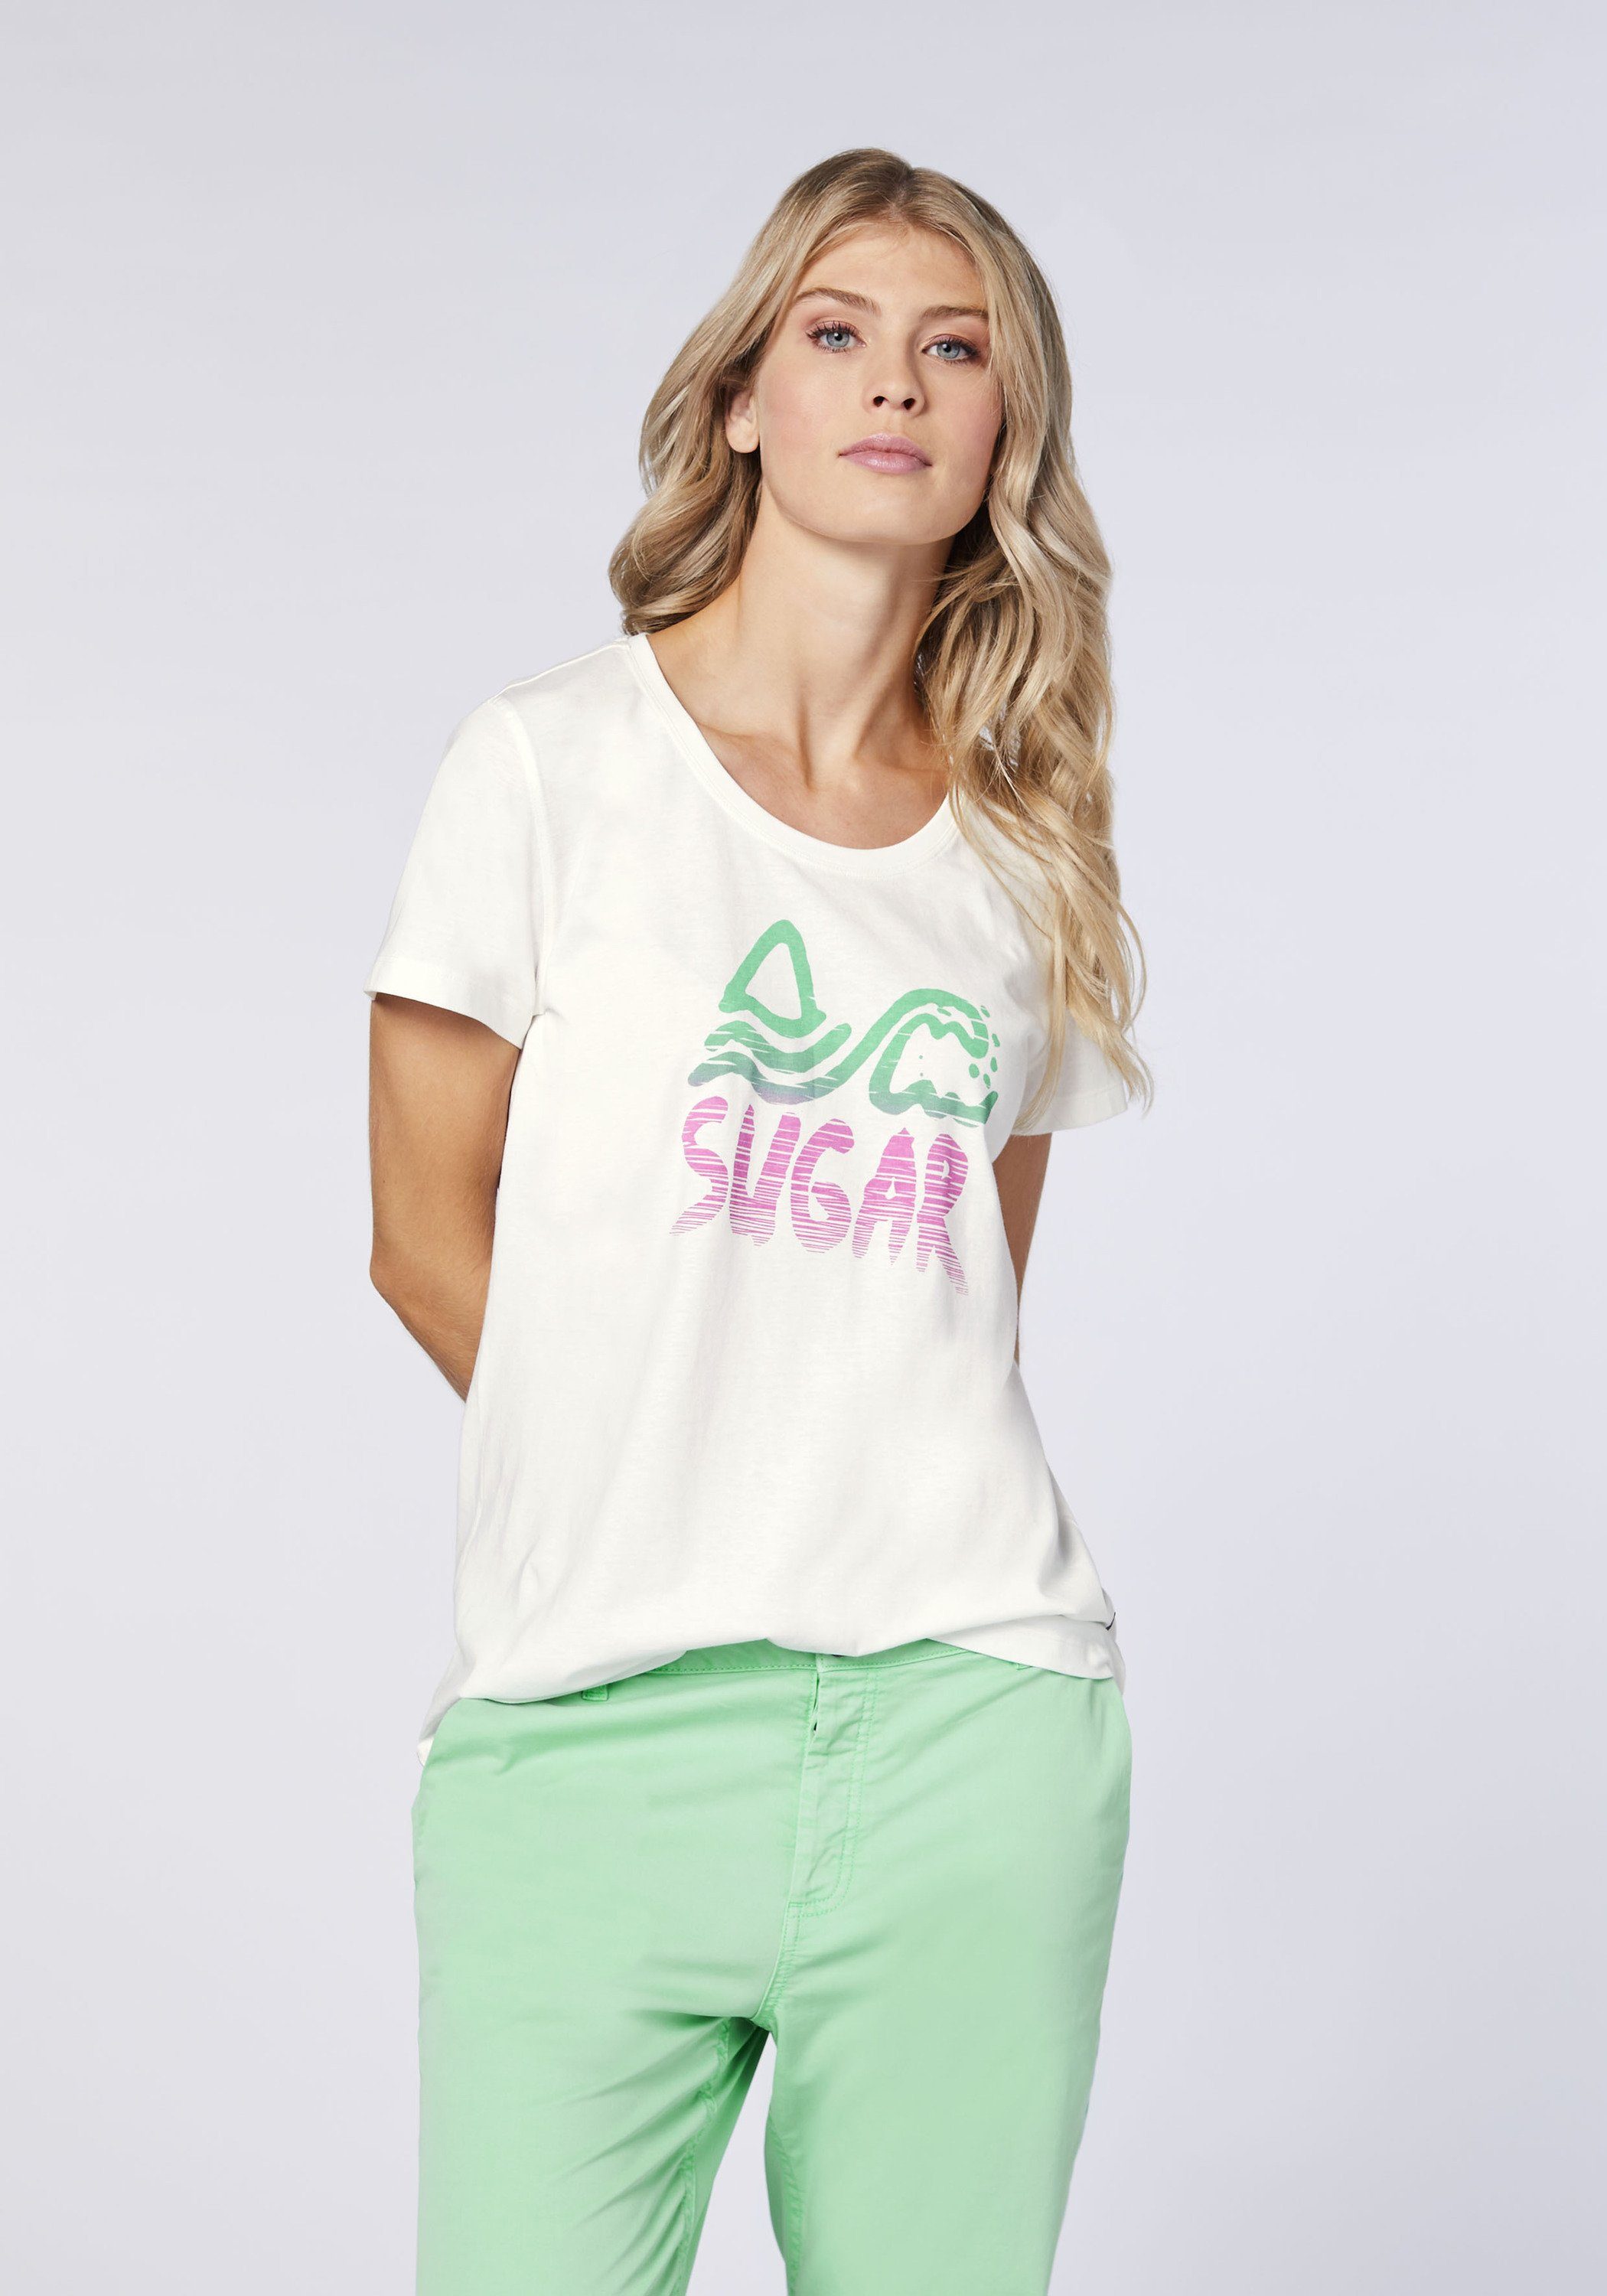 Frontprint Print-Shirt farbenfrohem Pink 1 White/Light mit Chiemsee T-Shirt